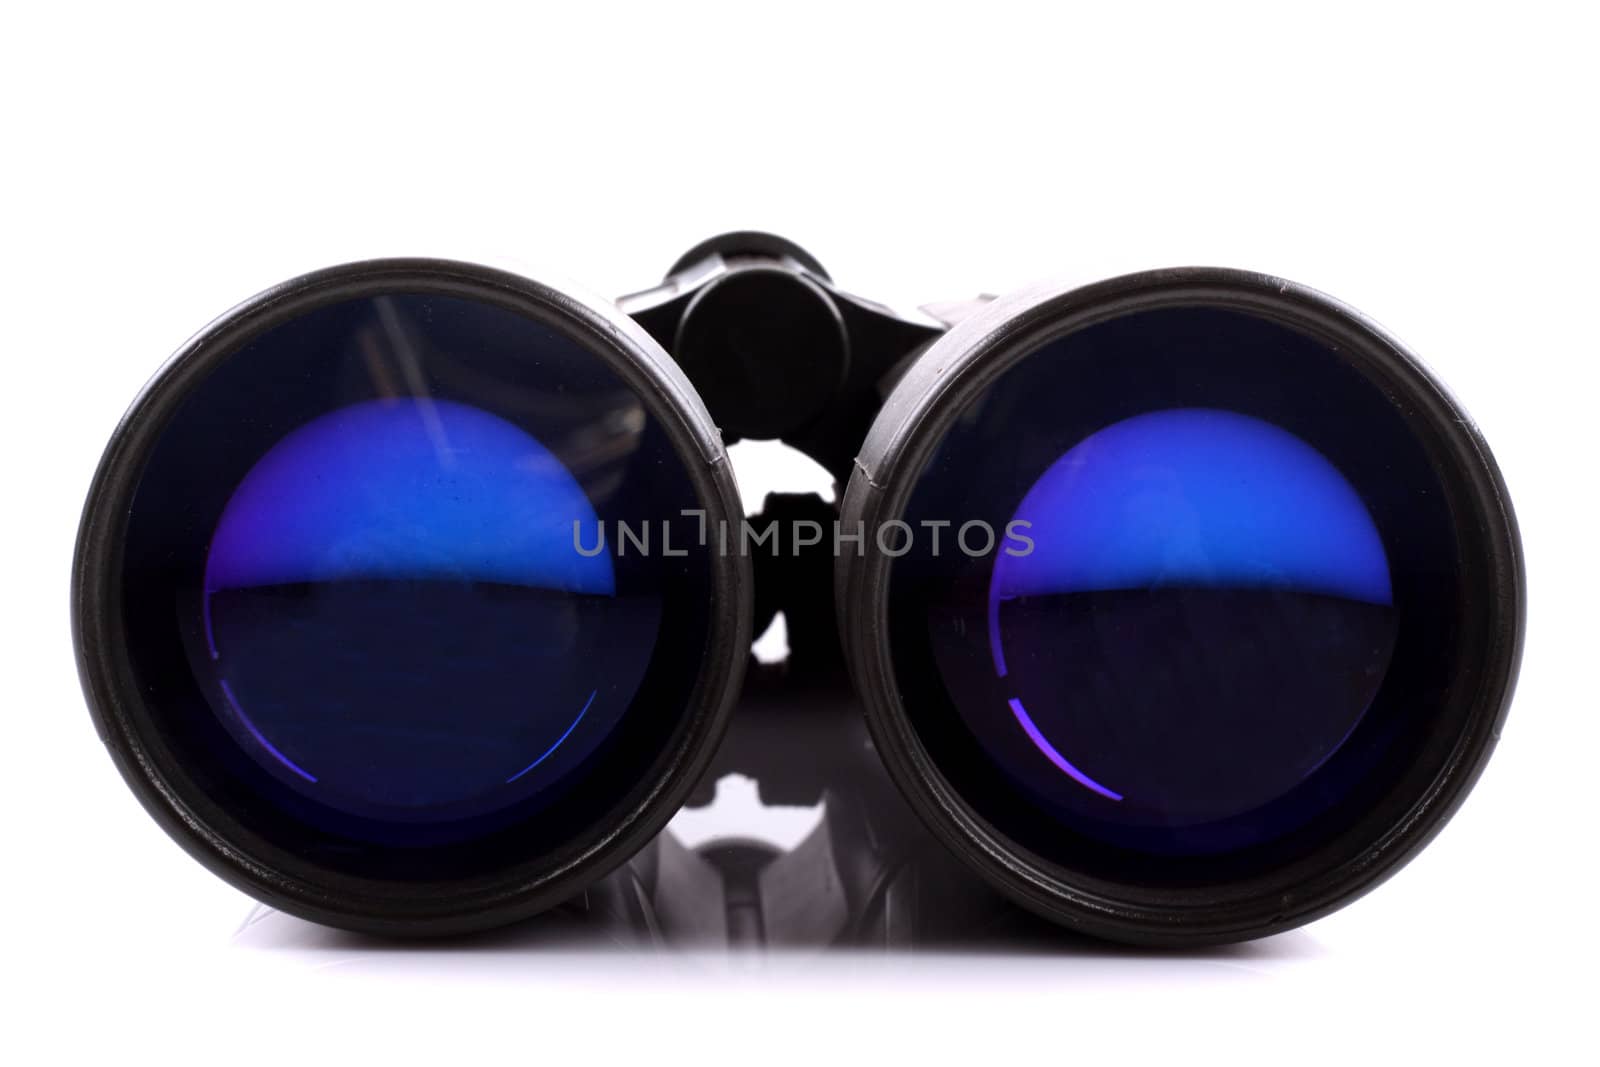 green binoculars with blue lenses